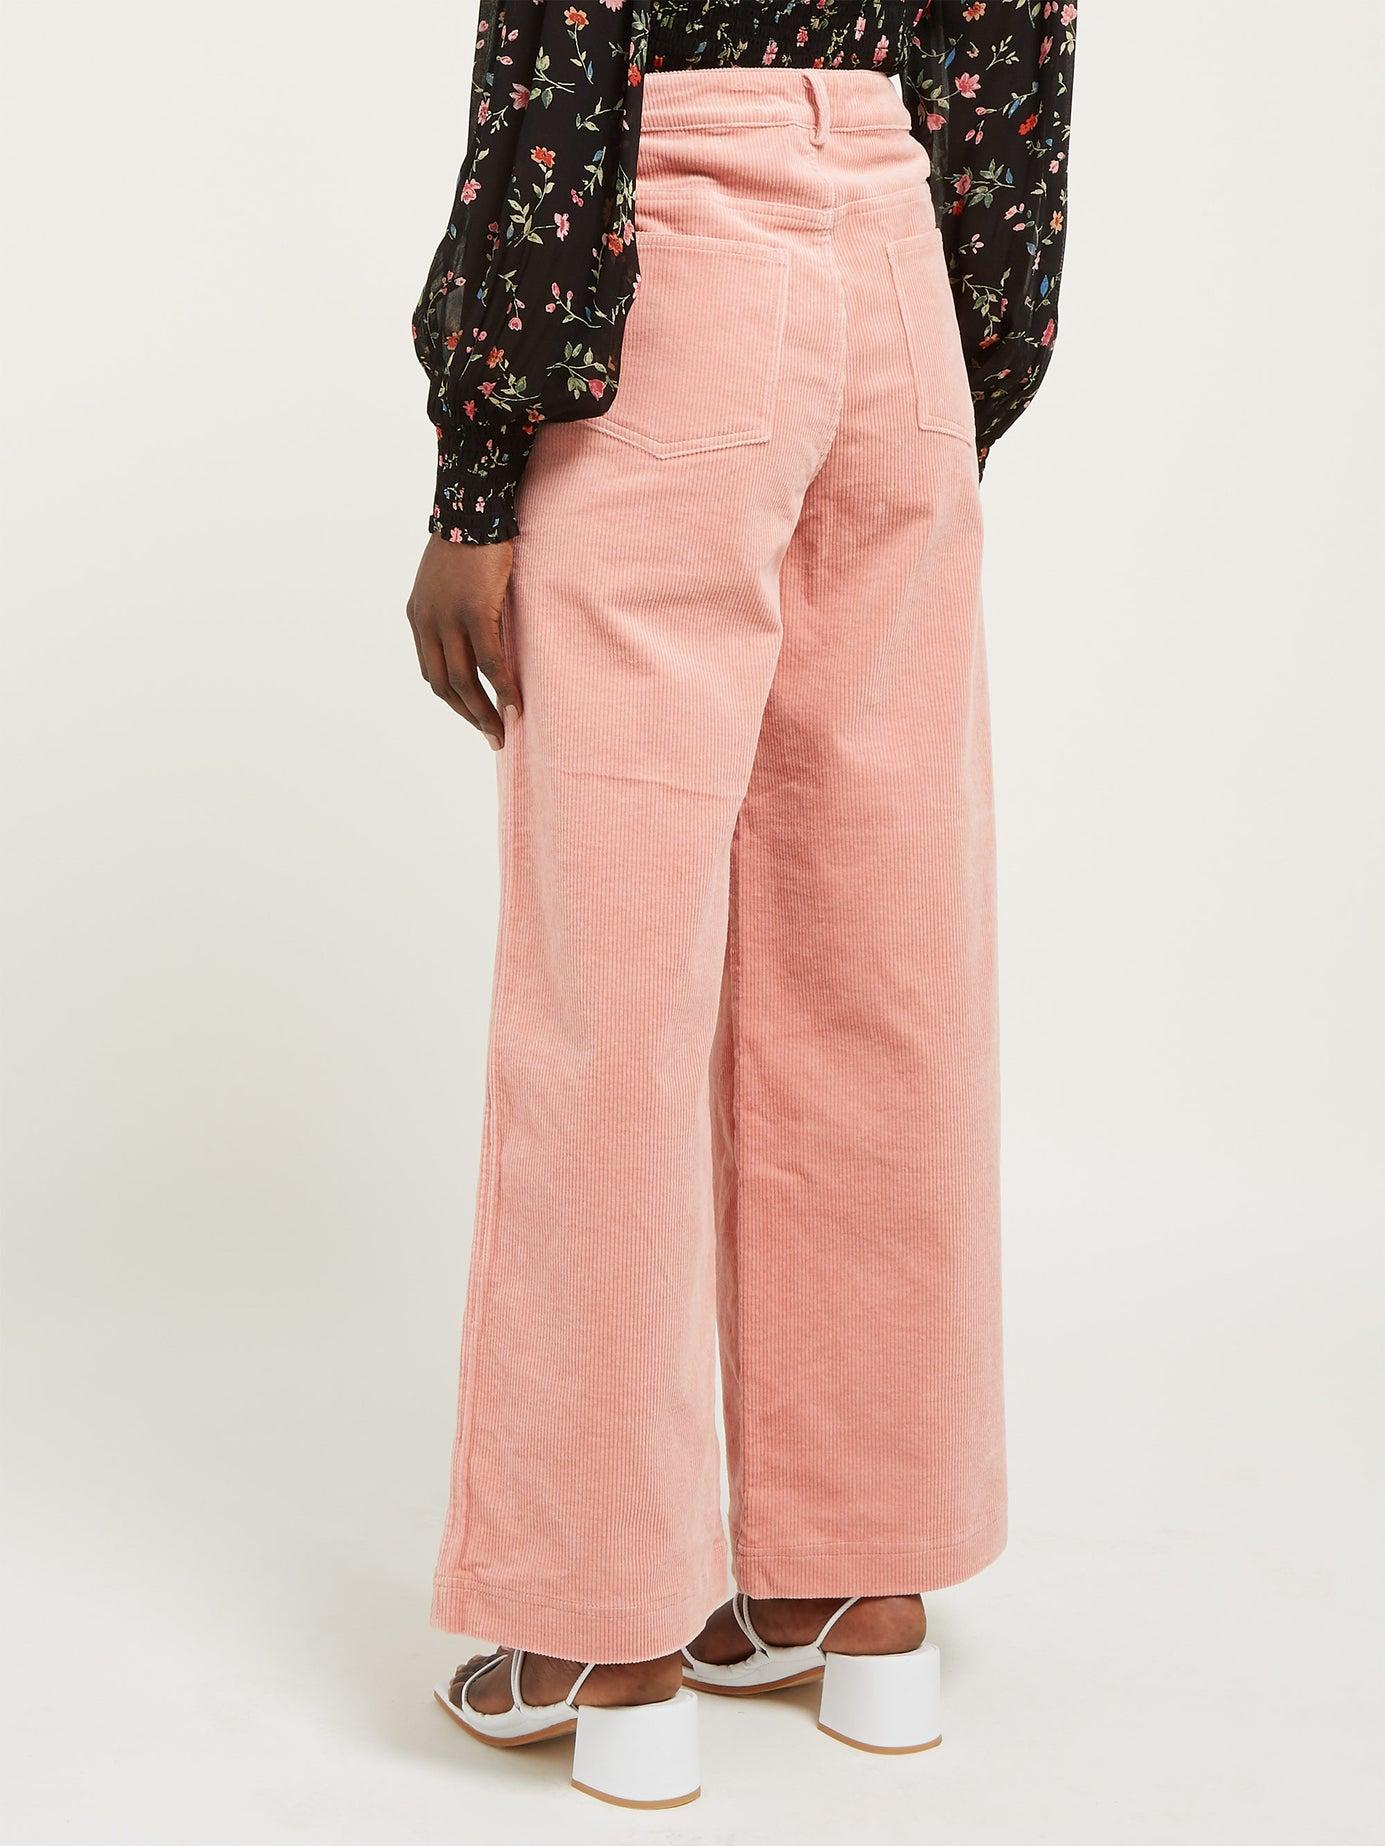 Ganni Corduroy Ridgewood Pants in Silver Pink (Pink) | Lyst